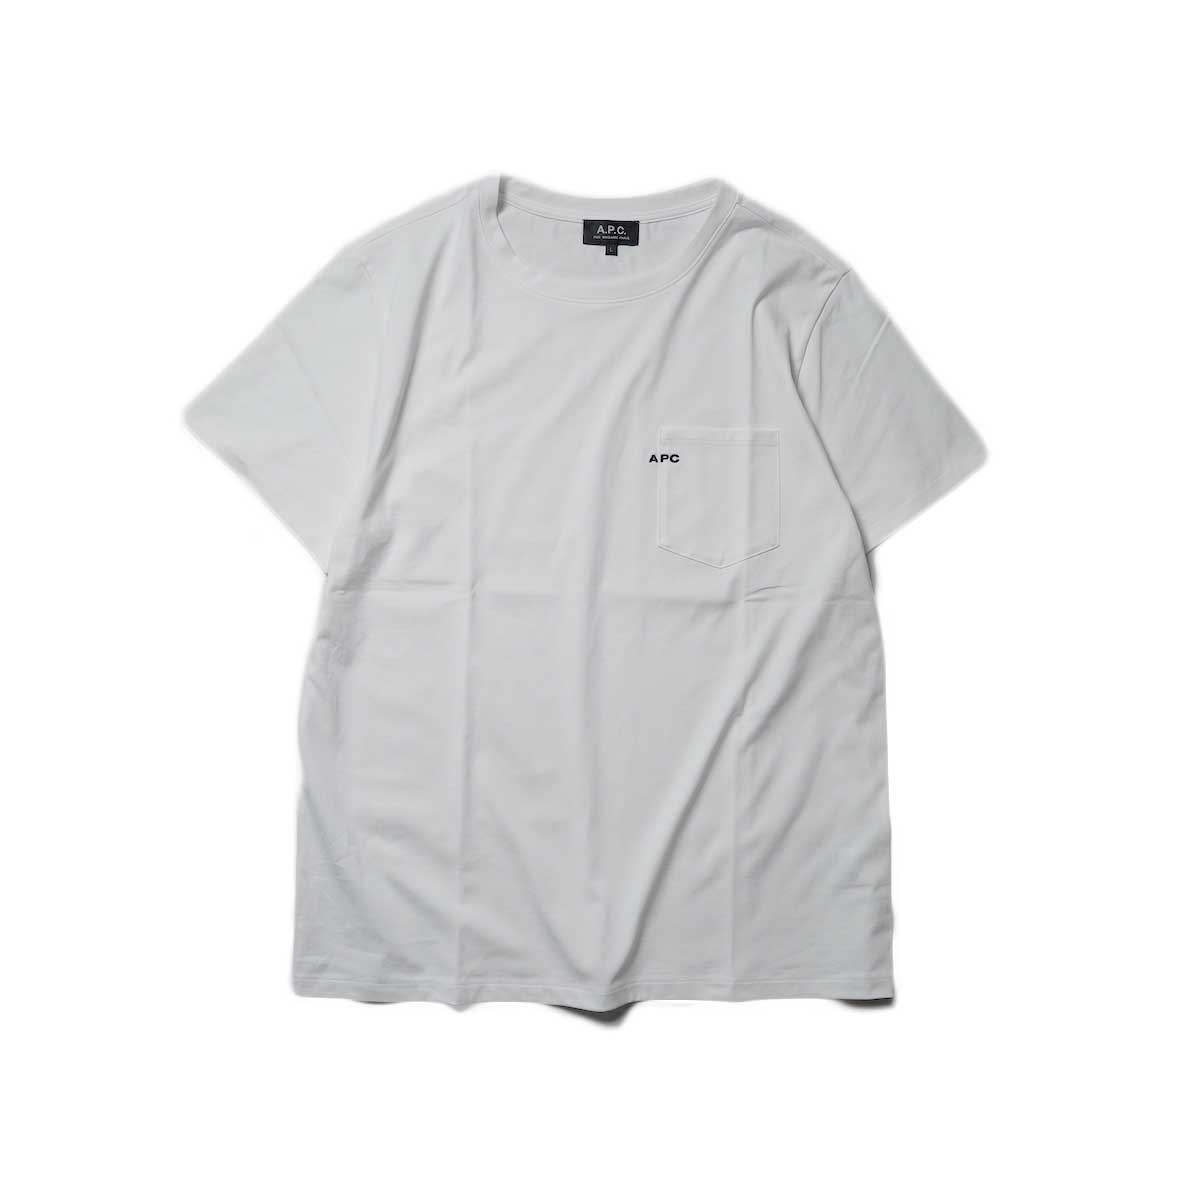 A.P.C. / 刺繍入りポケットTシャツ (White)